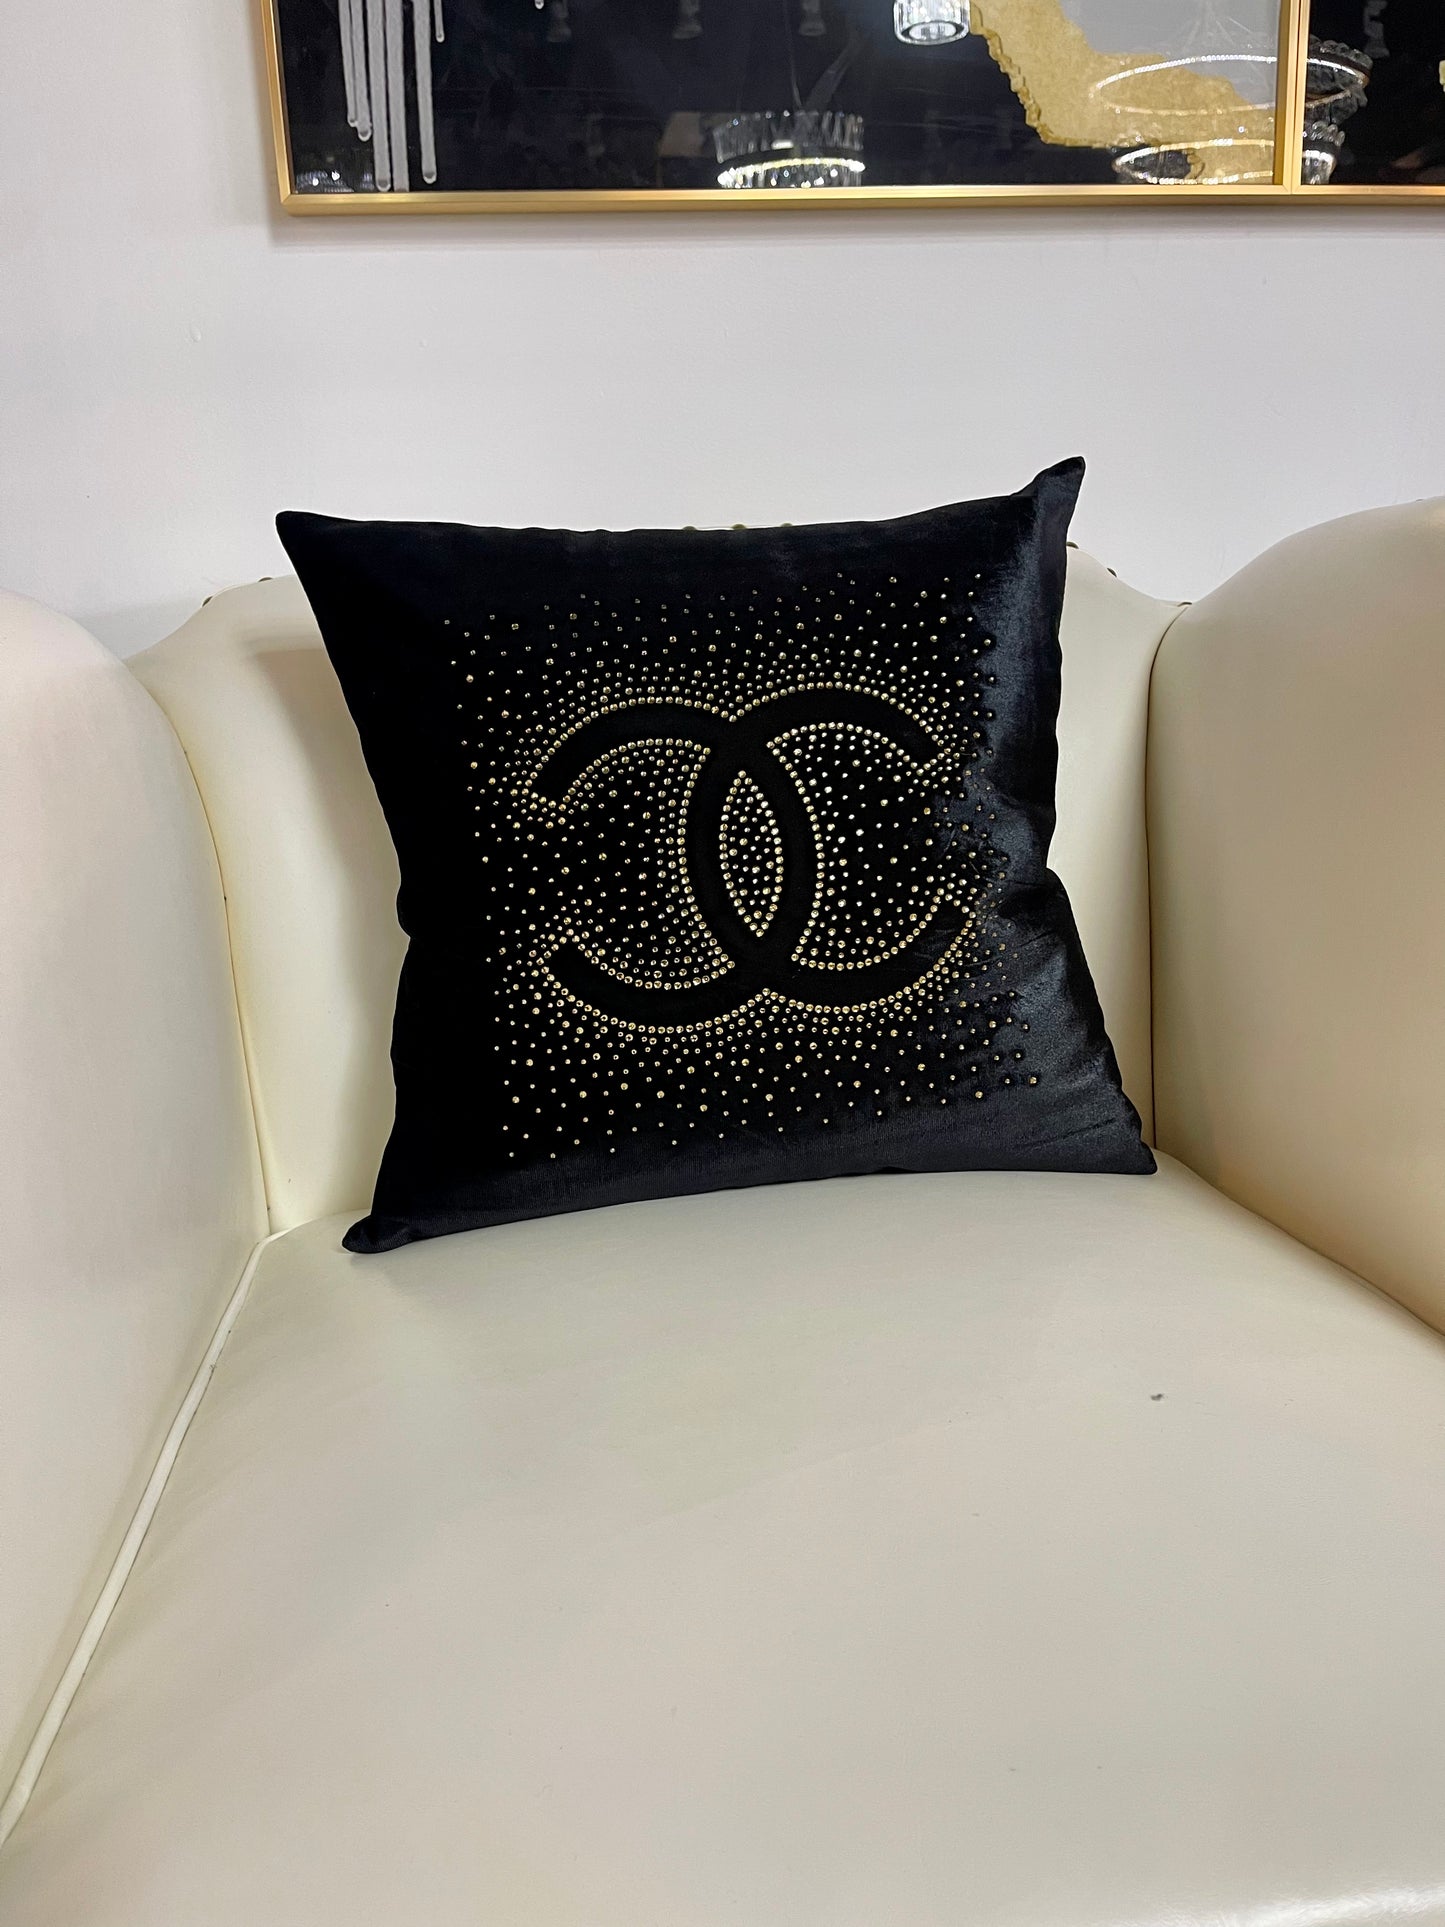 25 Chanel pillow ideas  chanel decor, chanel room, glamour decor